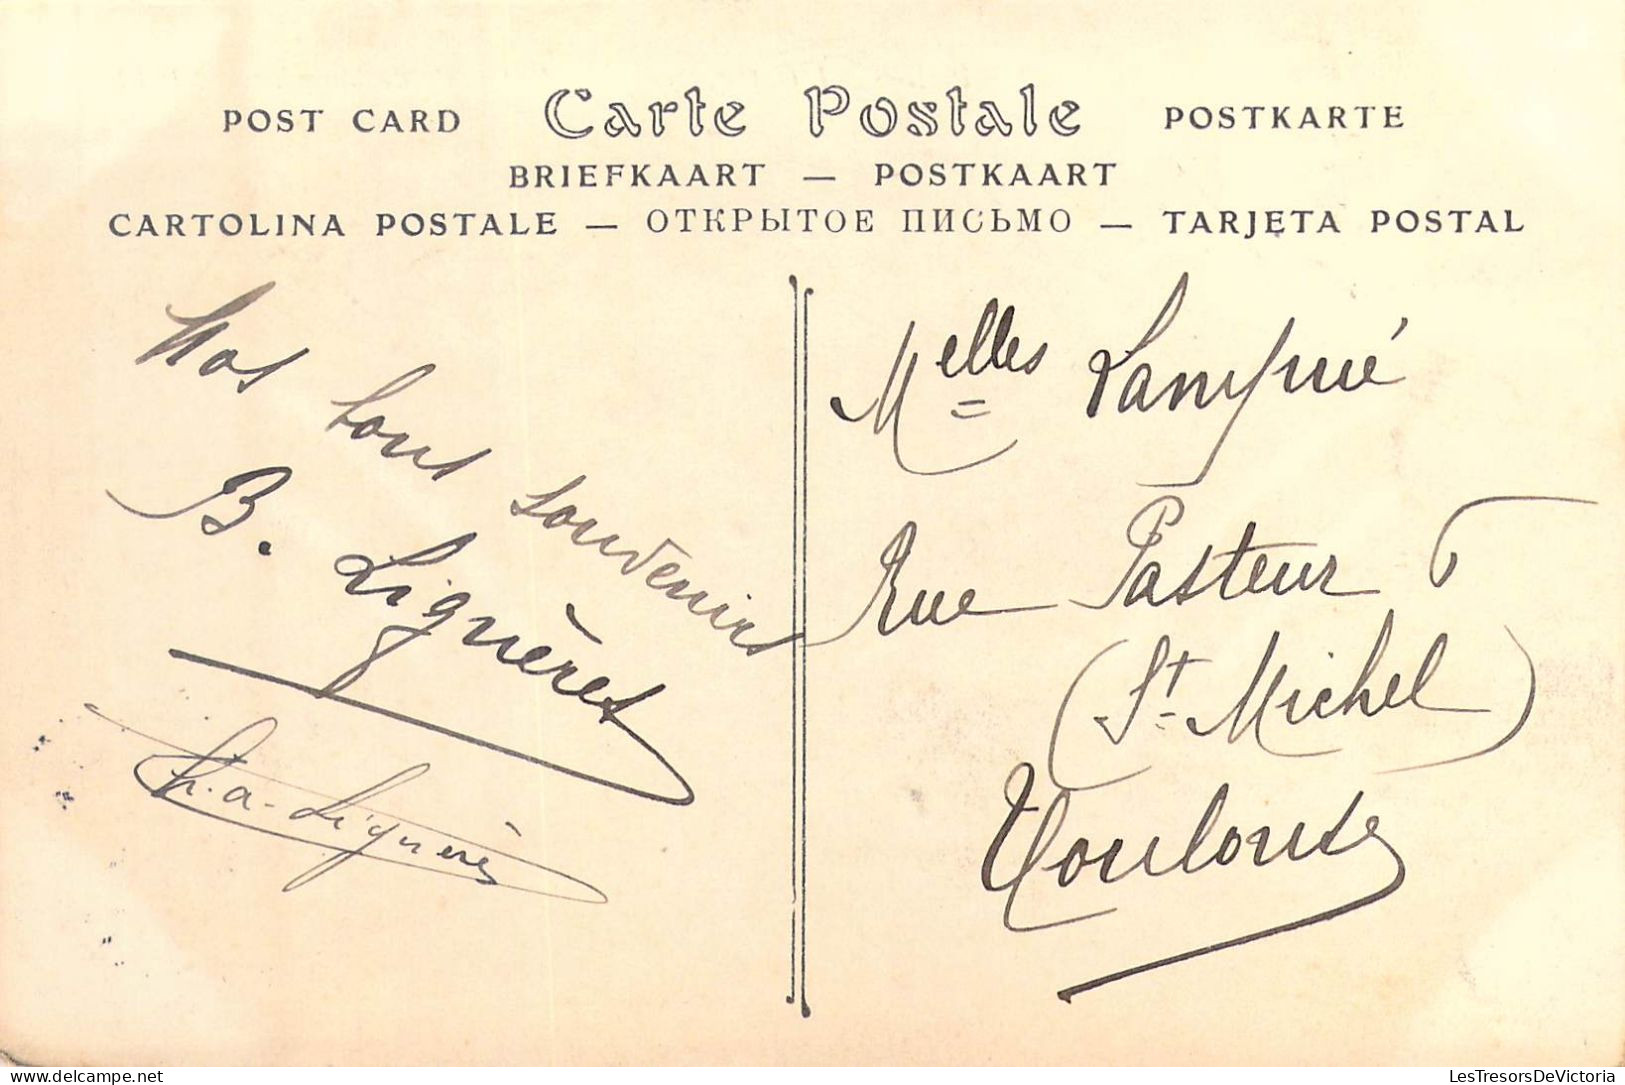 FRANCE - 75 - Paris - L'Opéra, Académie Nationale De Police - Carte Postale Ancienne - Sonstige Sehenswürdigkeiten